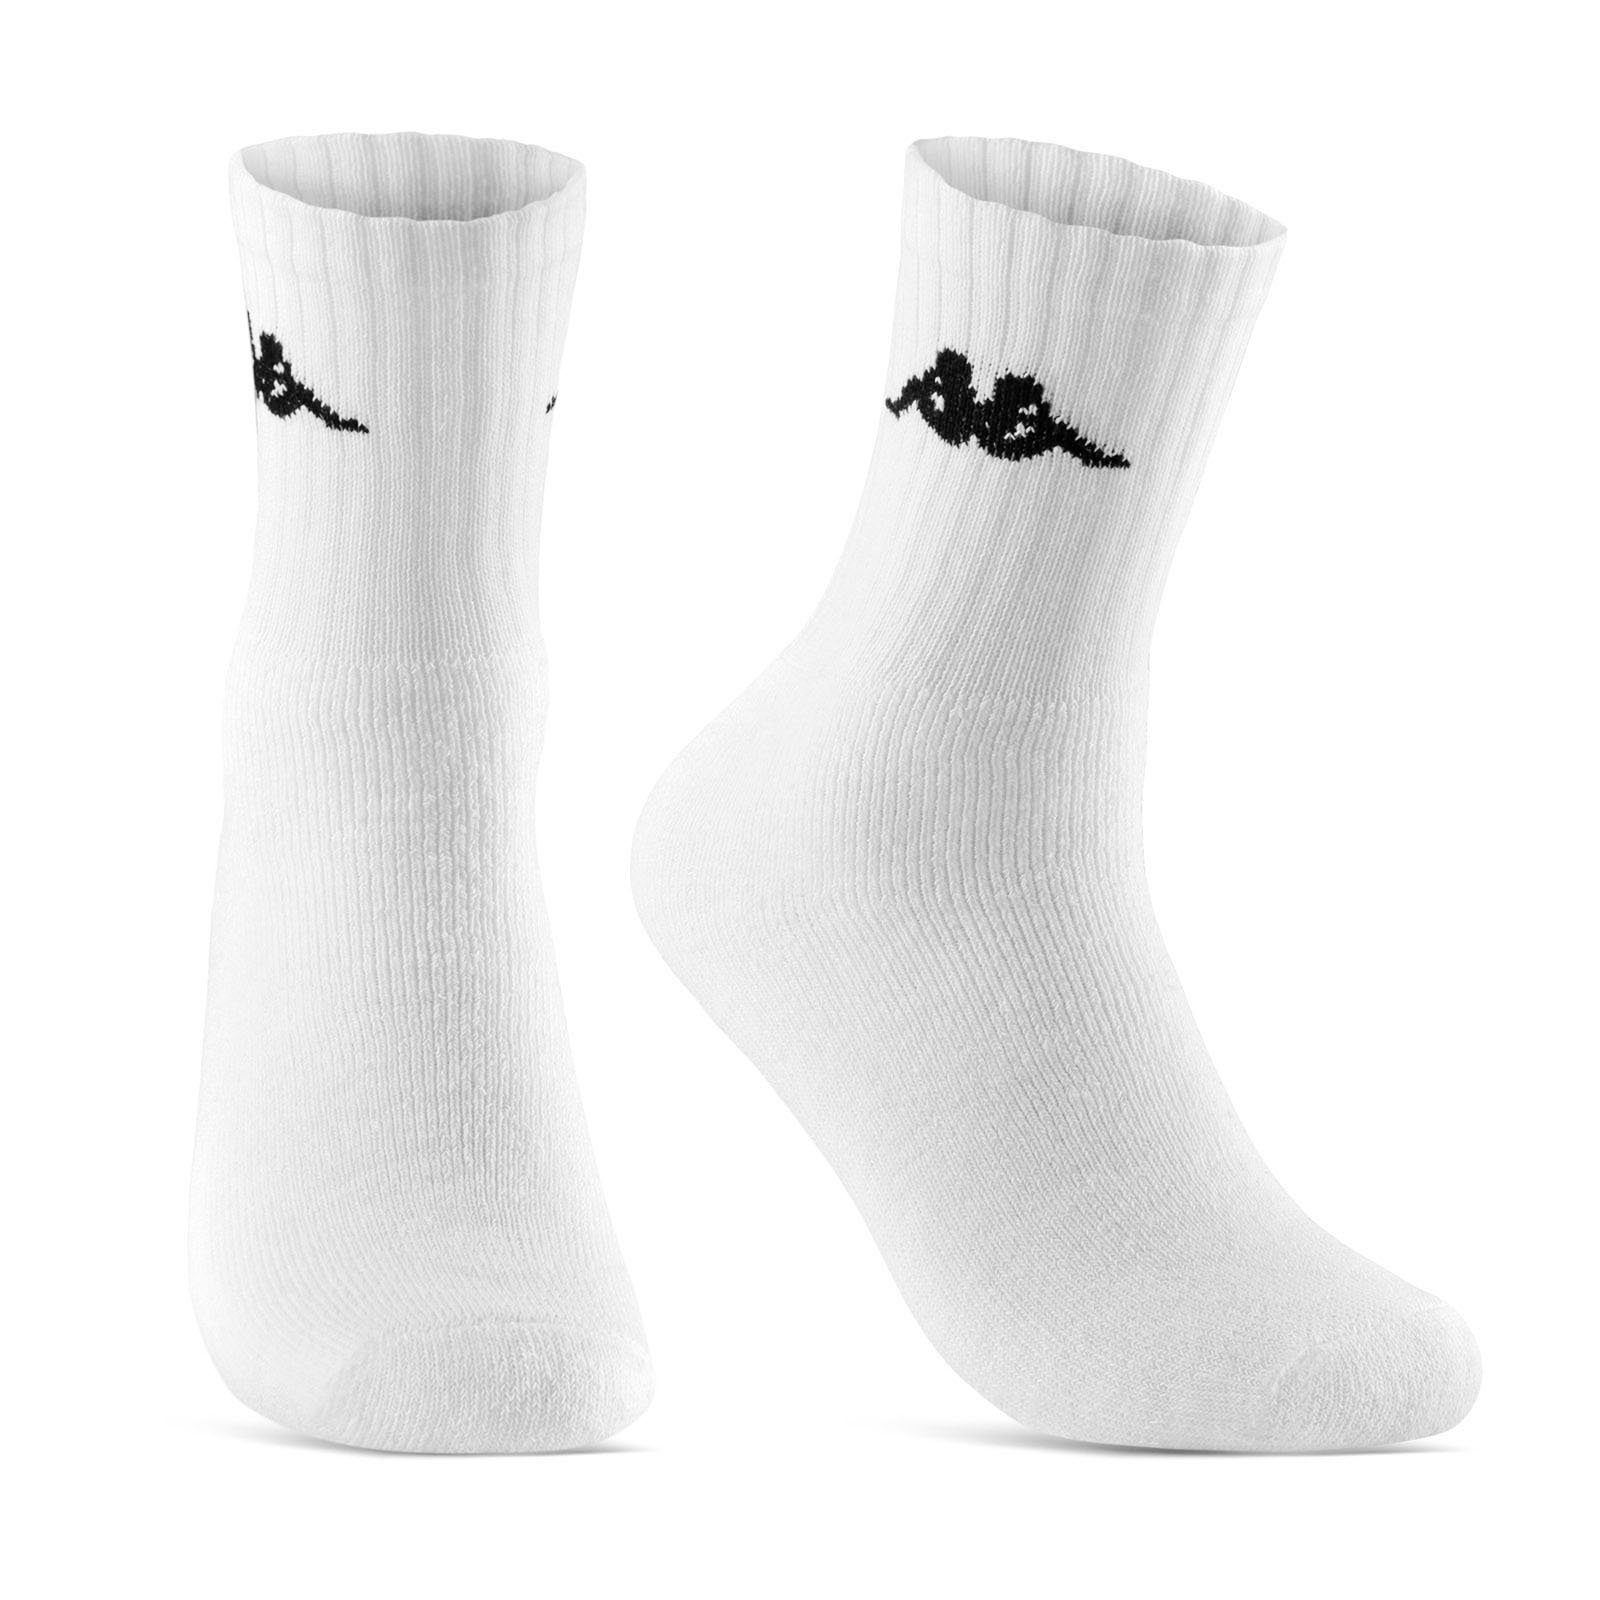 Sportsocken Paar Sportsocken 6 Baumwolle (Weiß, WP sockenkauf24 Socken 12 Herren Damen oder 43-46) 6-Paar, & KAPPA Arbeitssocken